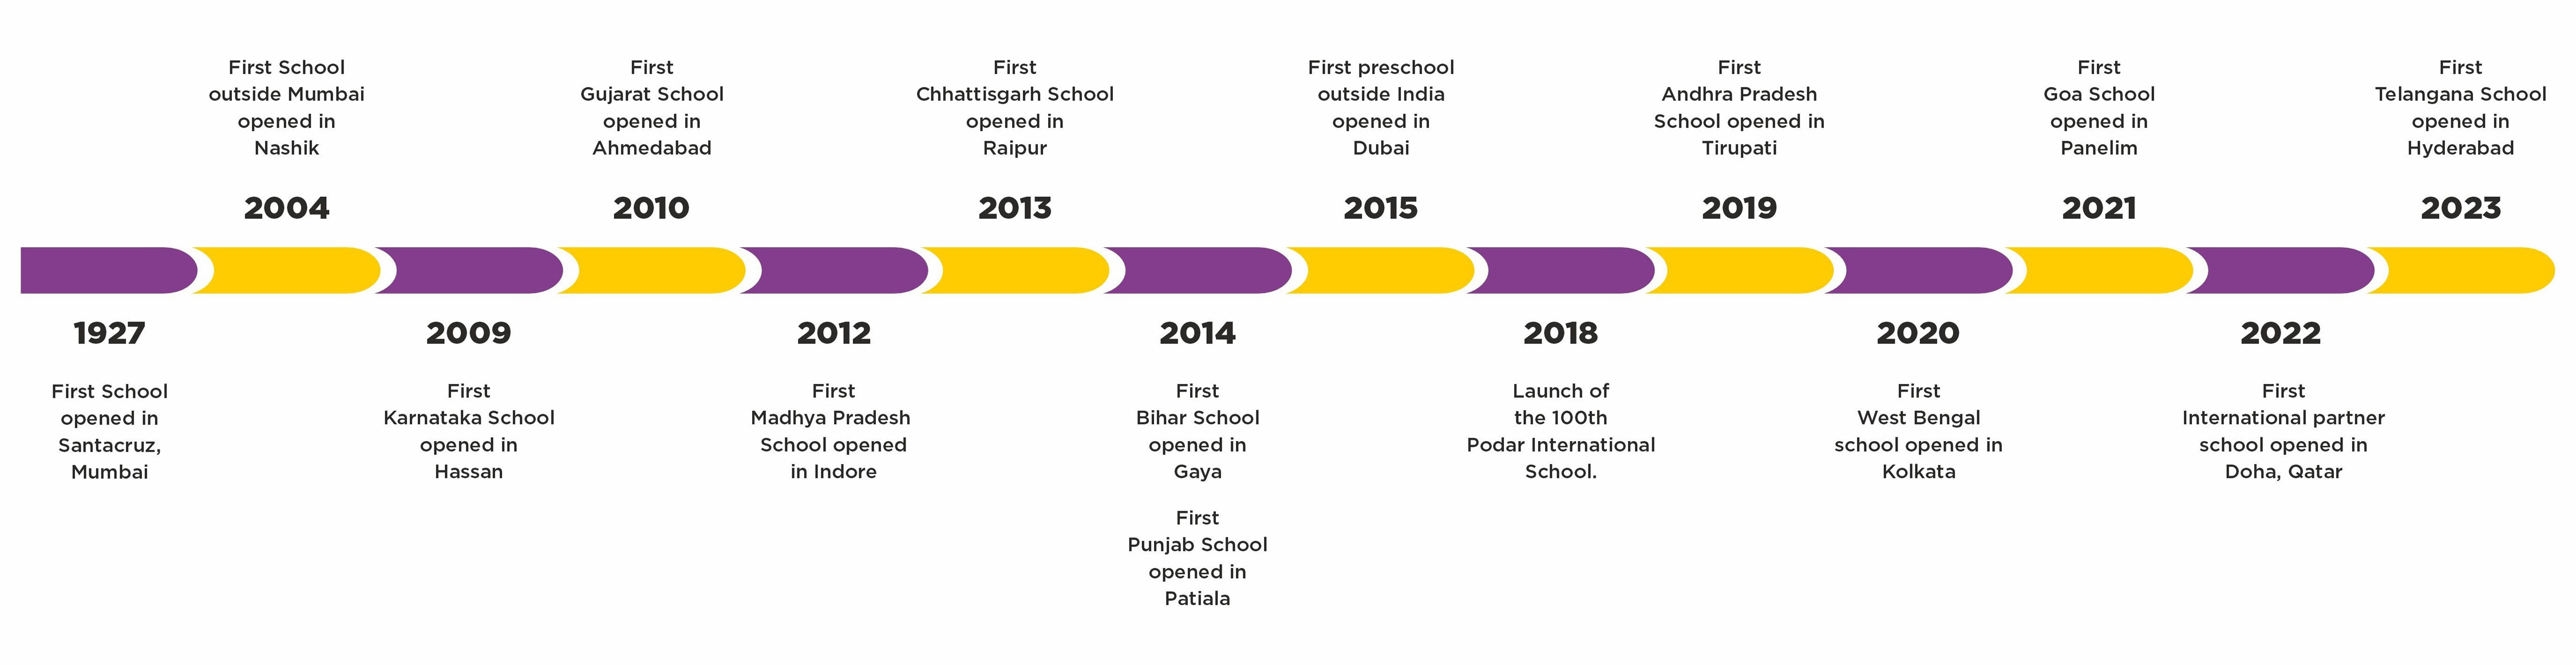 Podar Education Network History Timeline